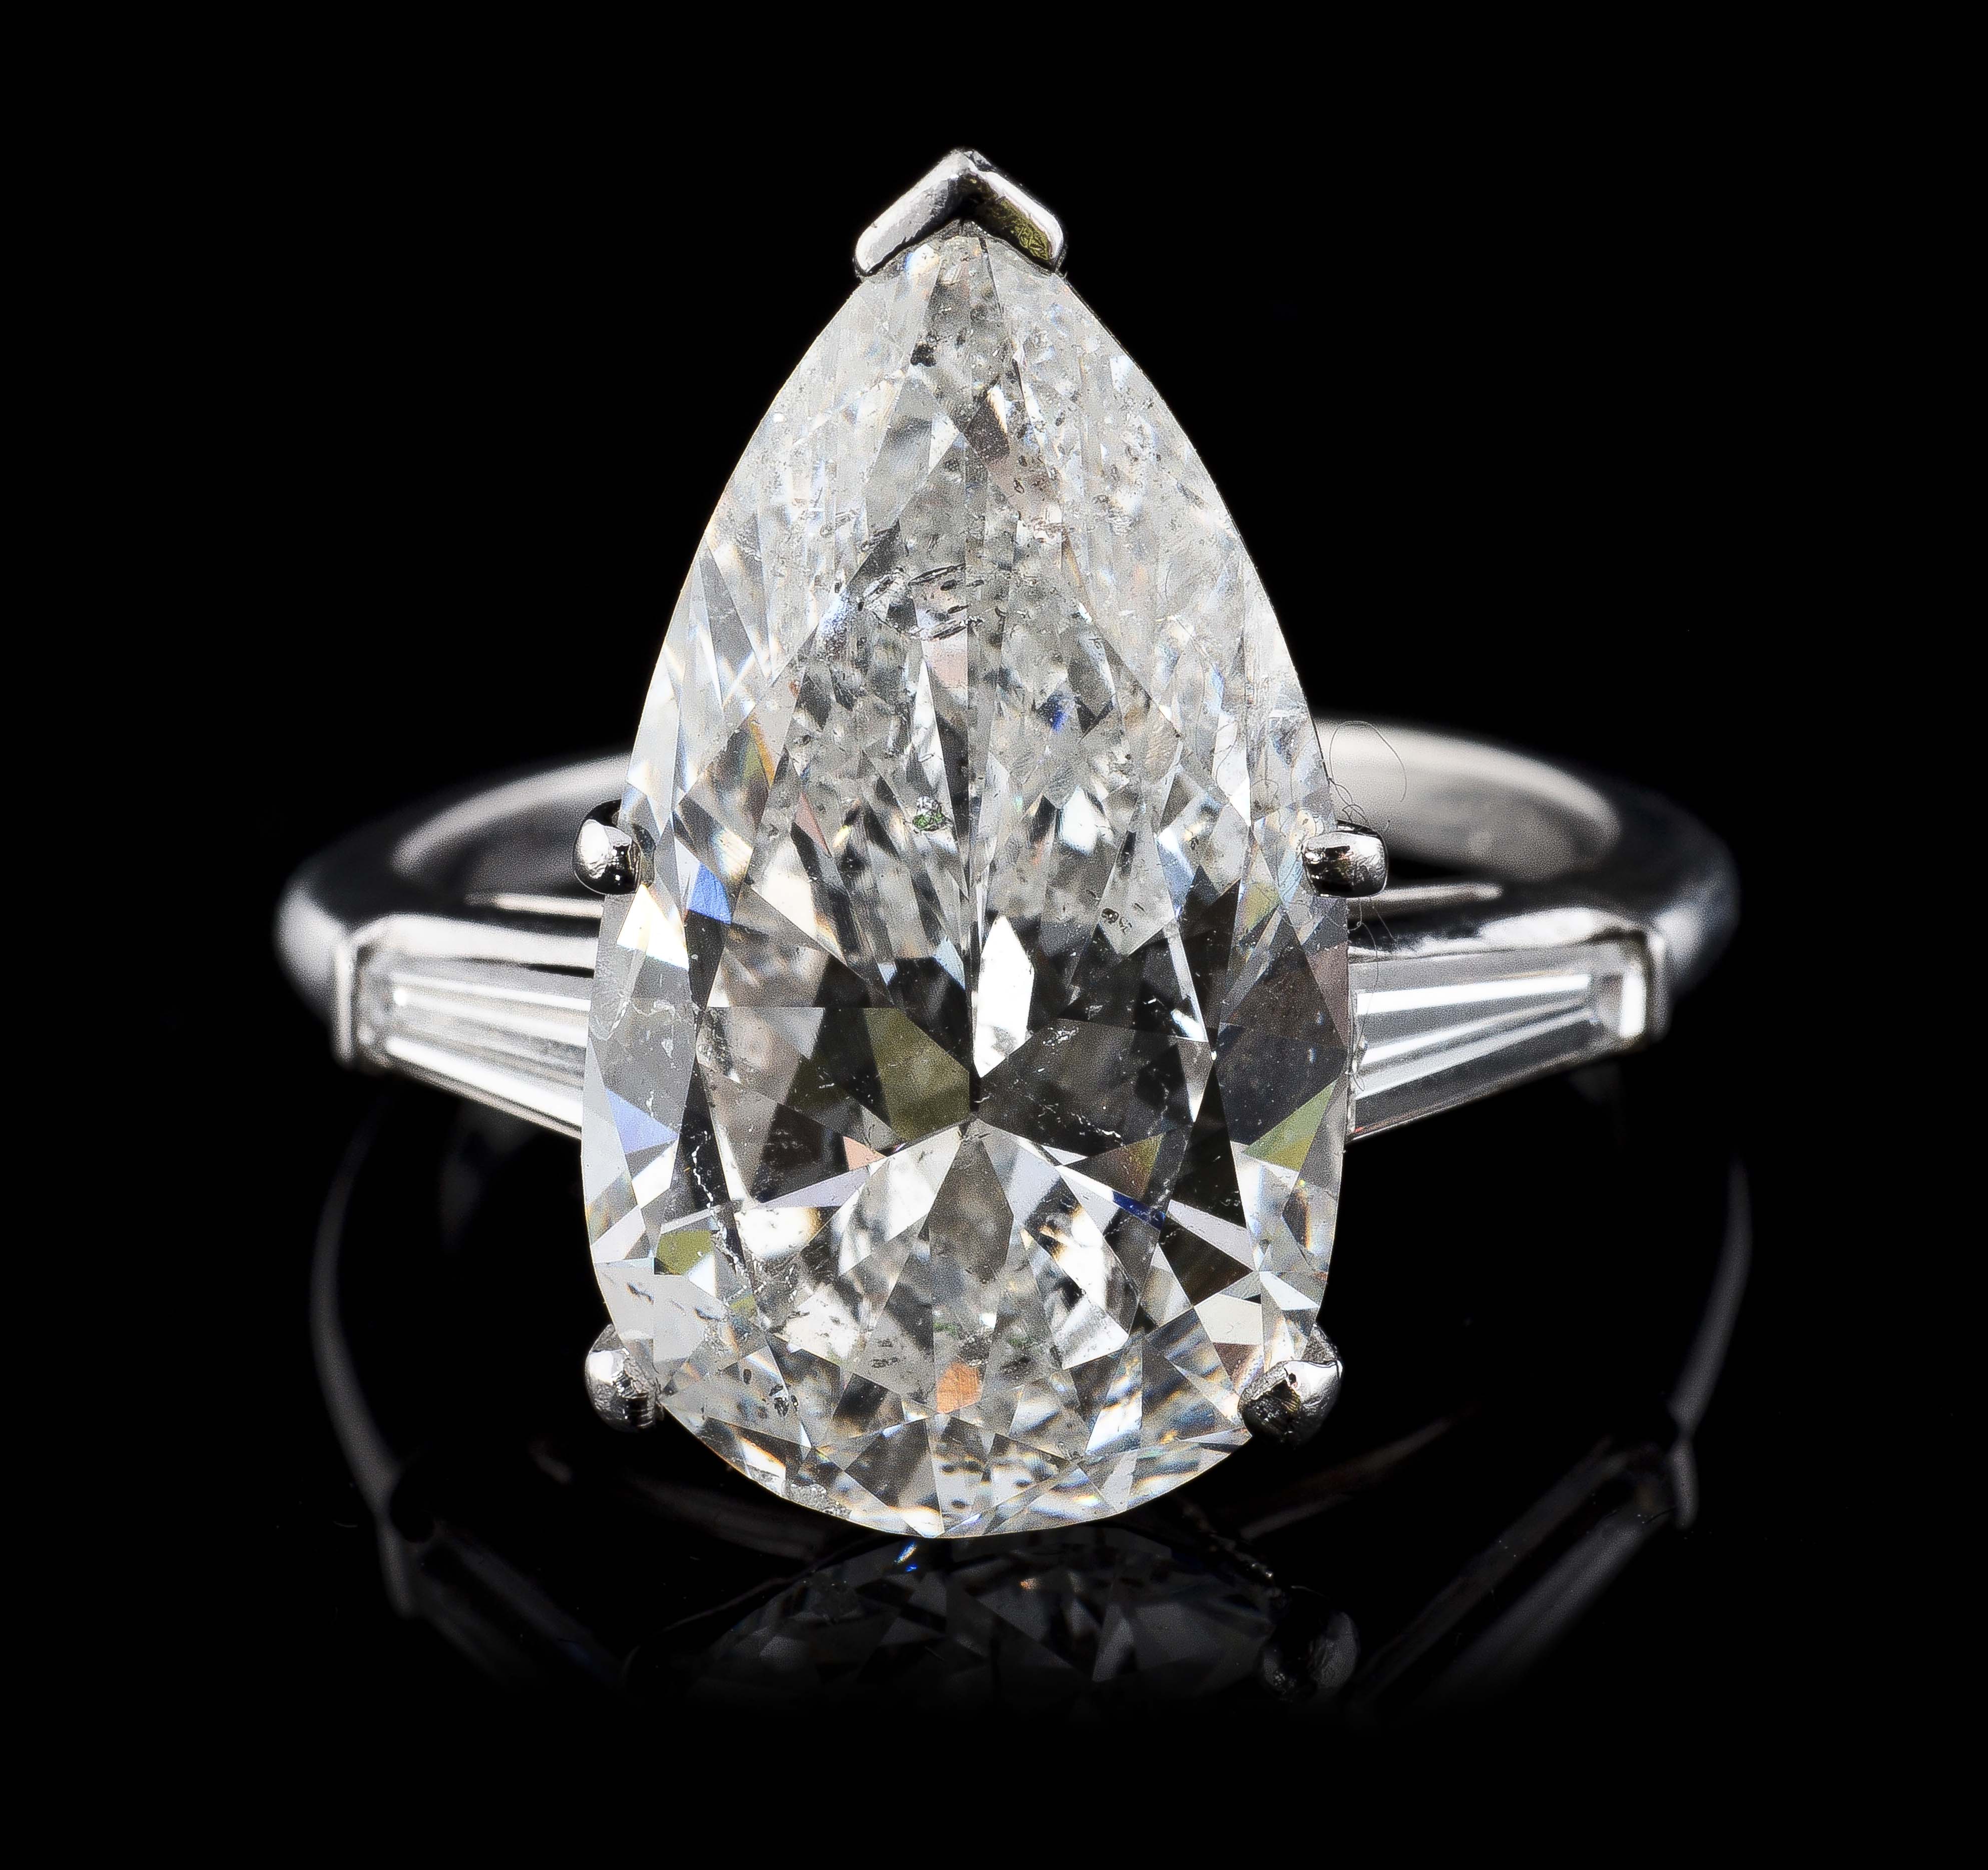 8.05 Carat Pear Shaped Diamond and Platinum Ring, estimated at $90,000-120,000.